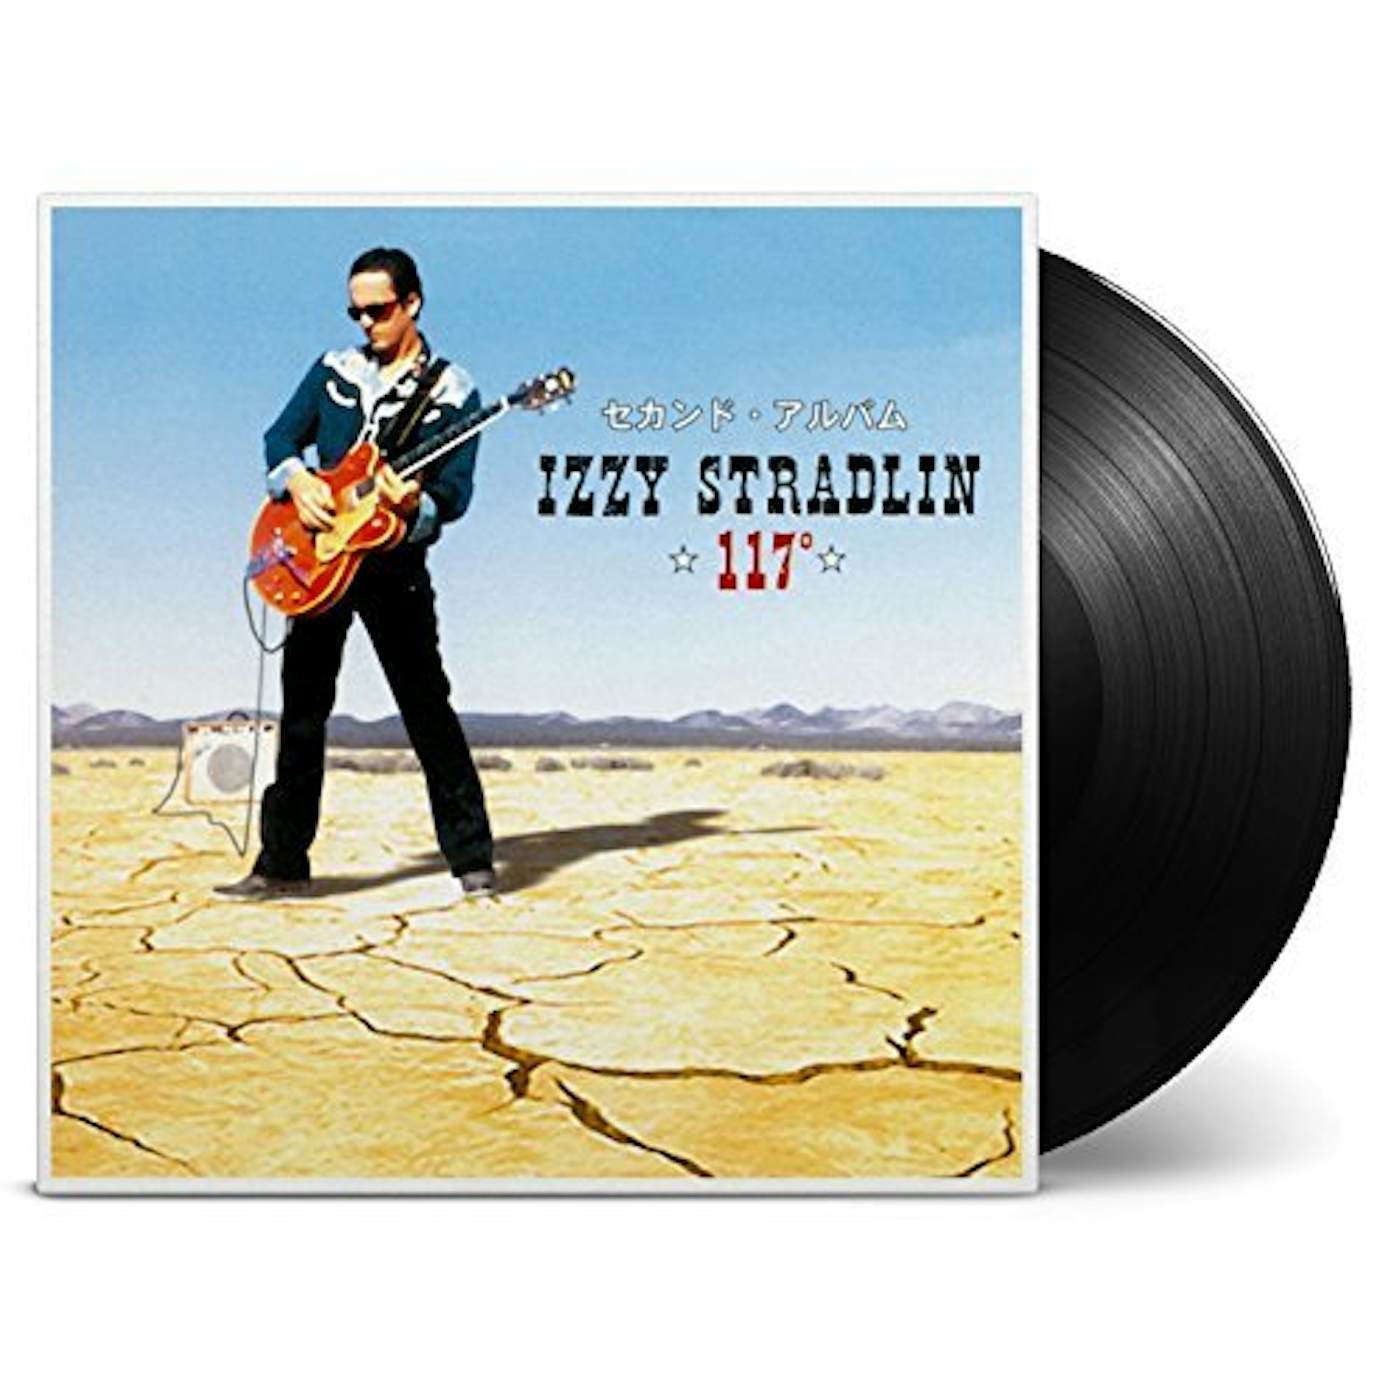 Izzy Stradlin 117 DEGREES Vinyl Record